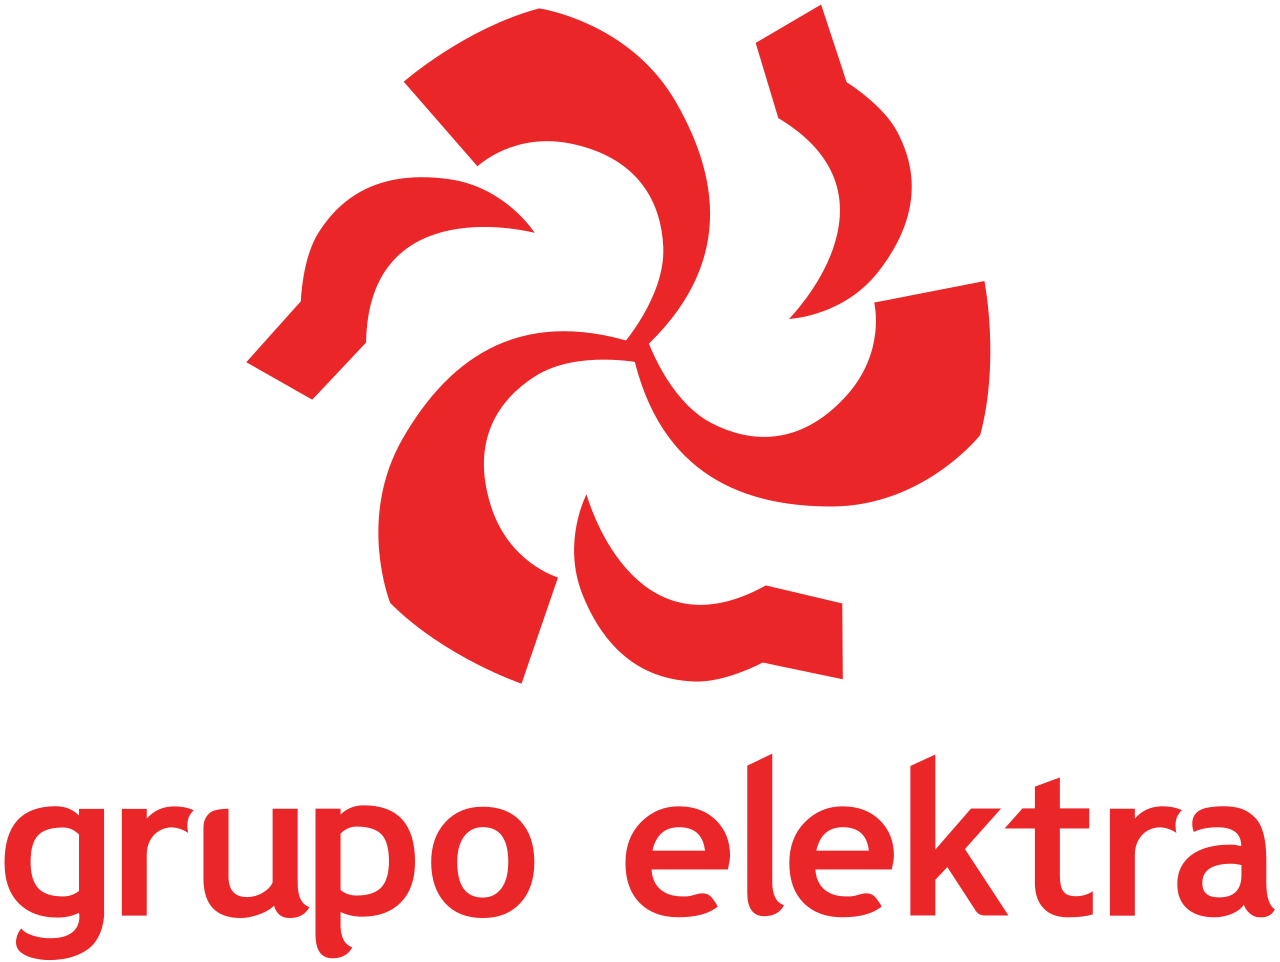 Elektra Brand Logo